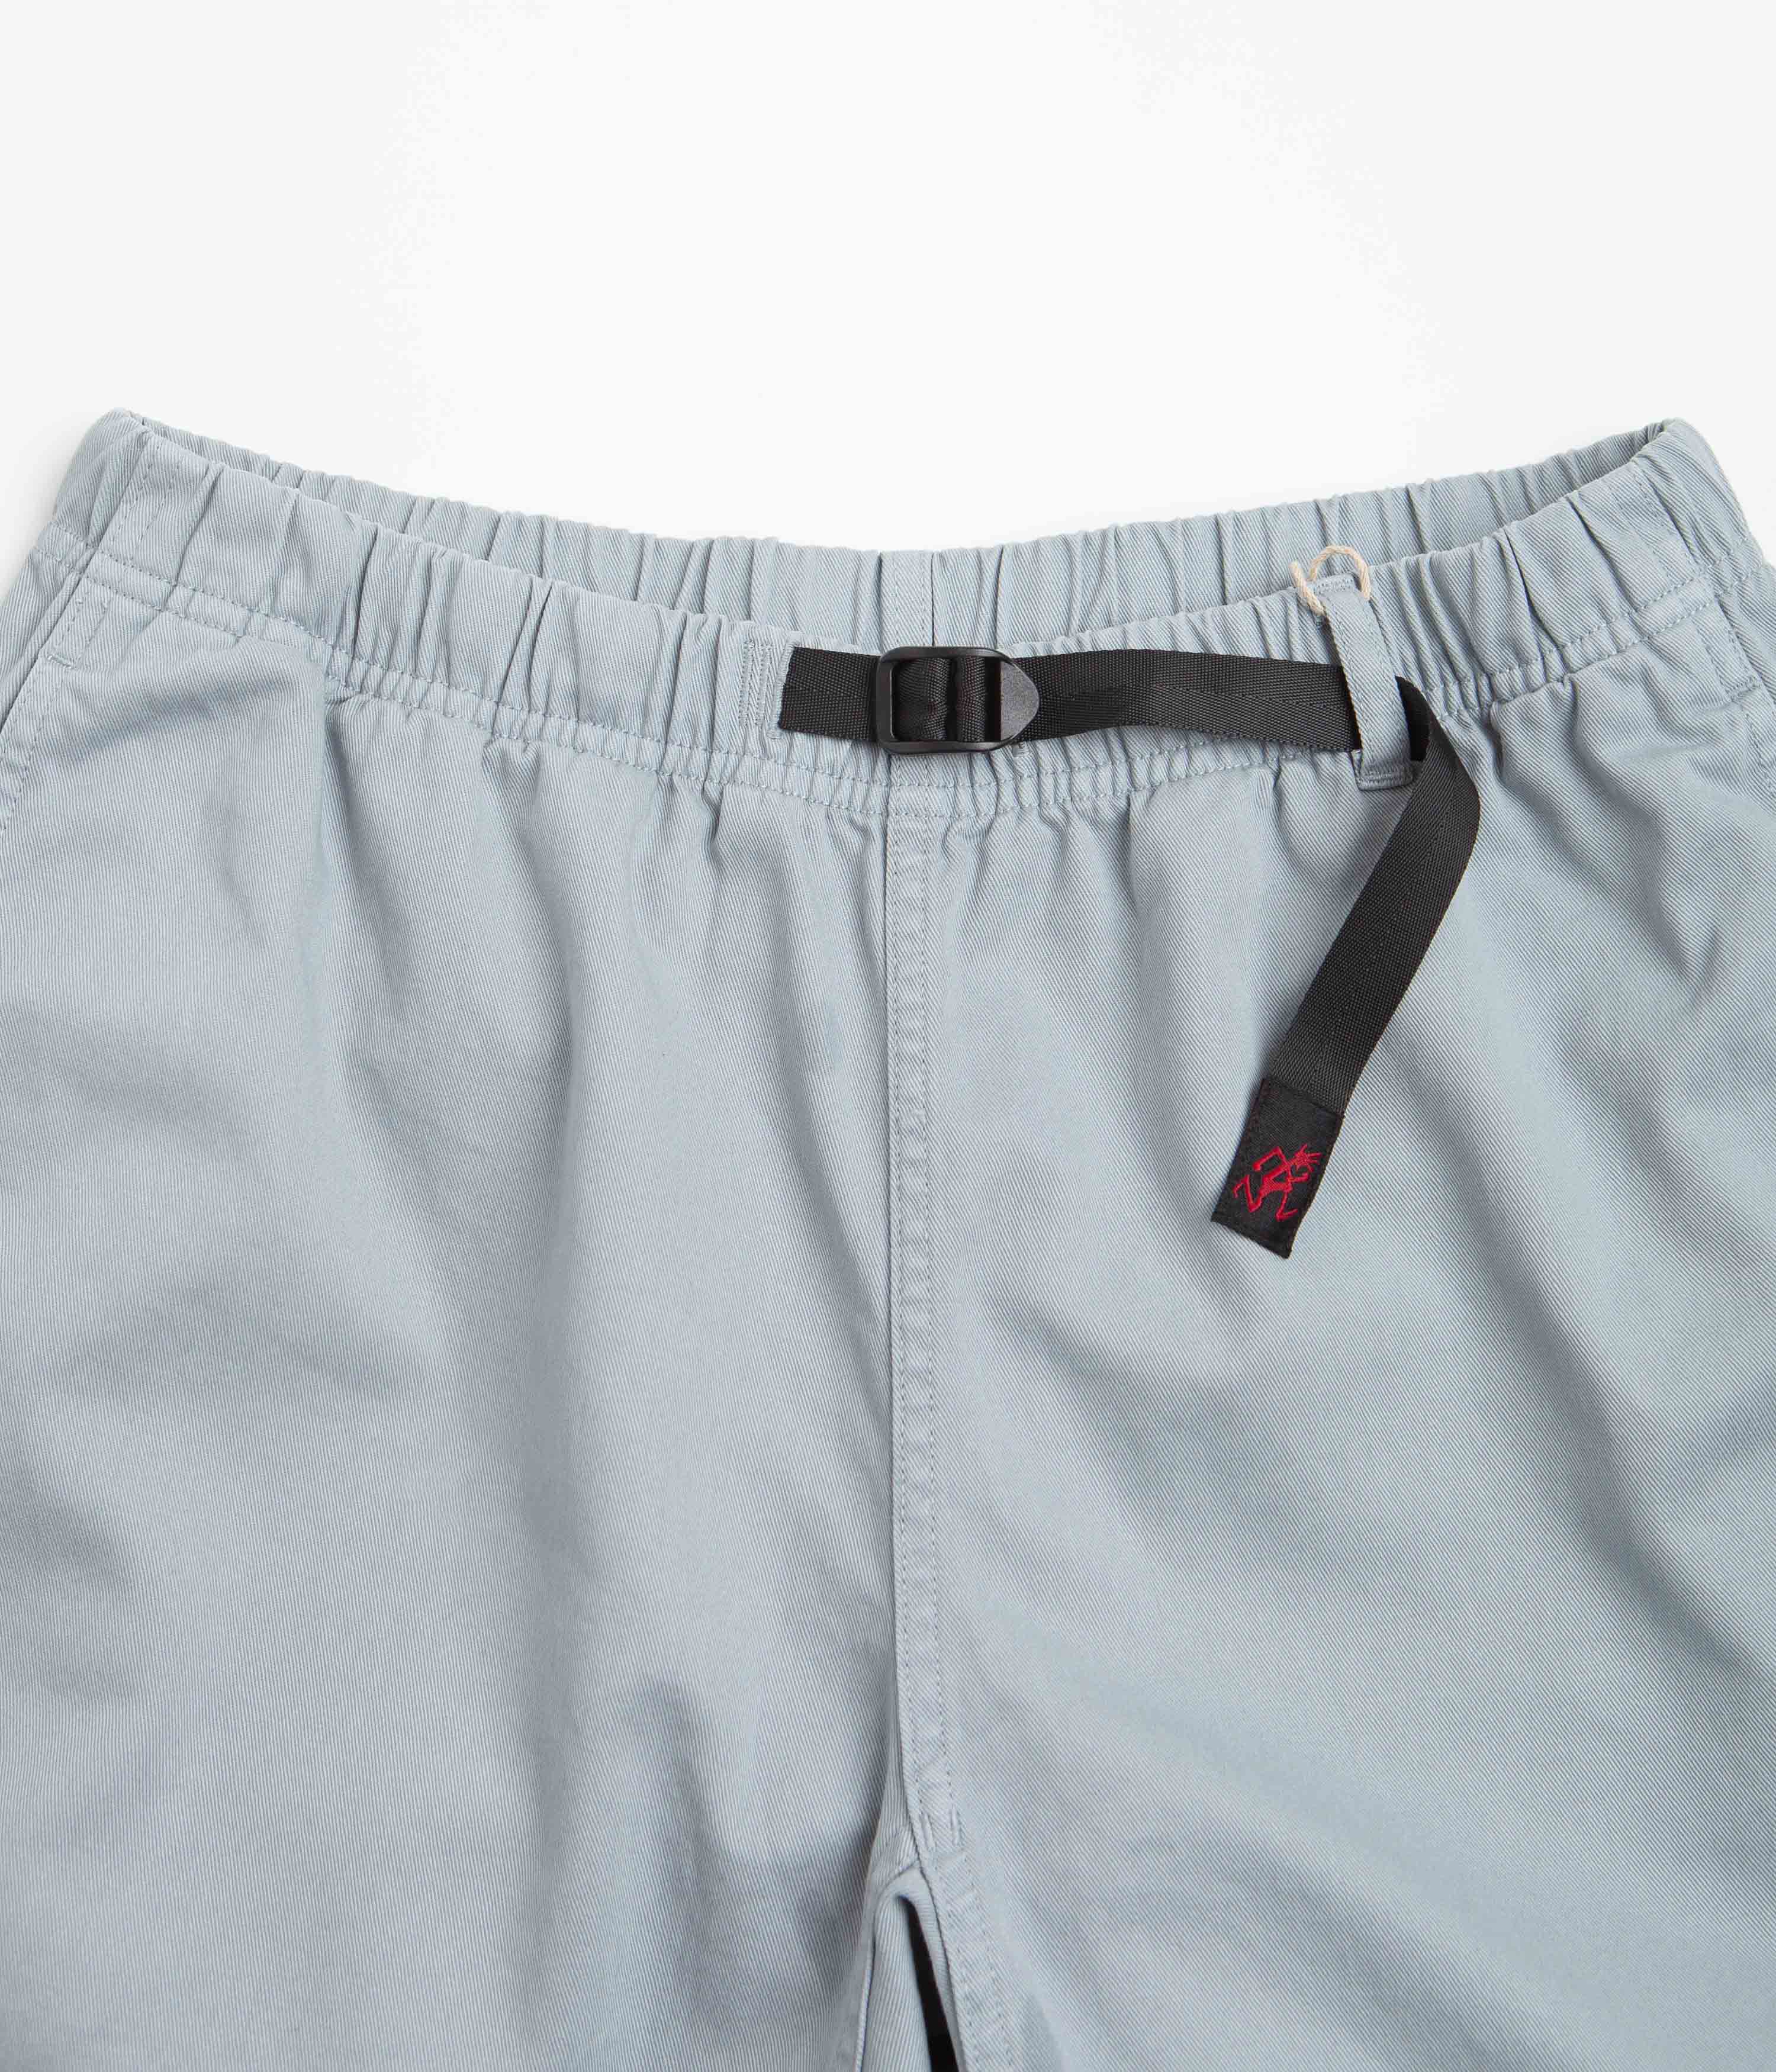 Gramicci G-Shorts - Smoky Blue | Flatspot